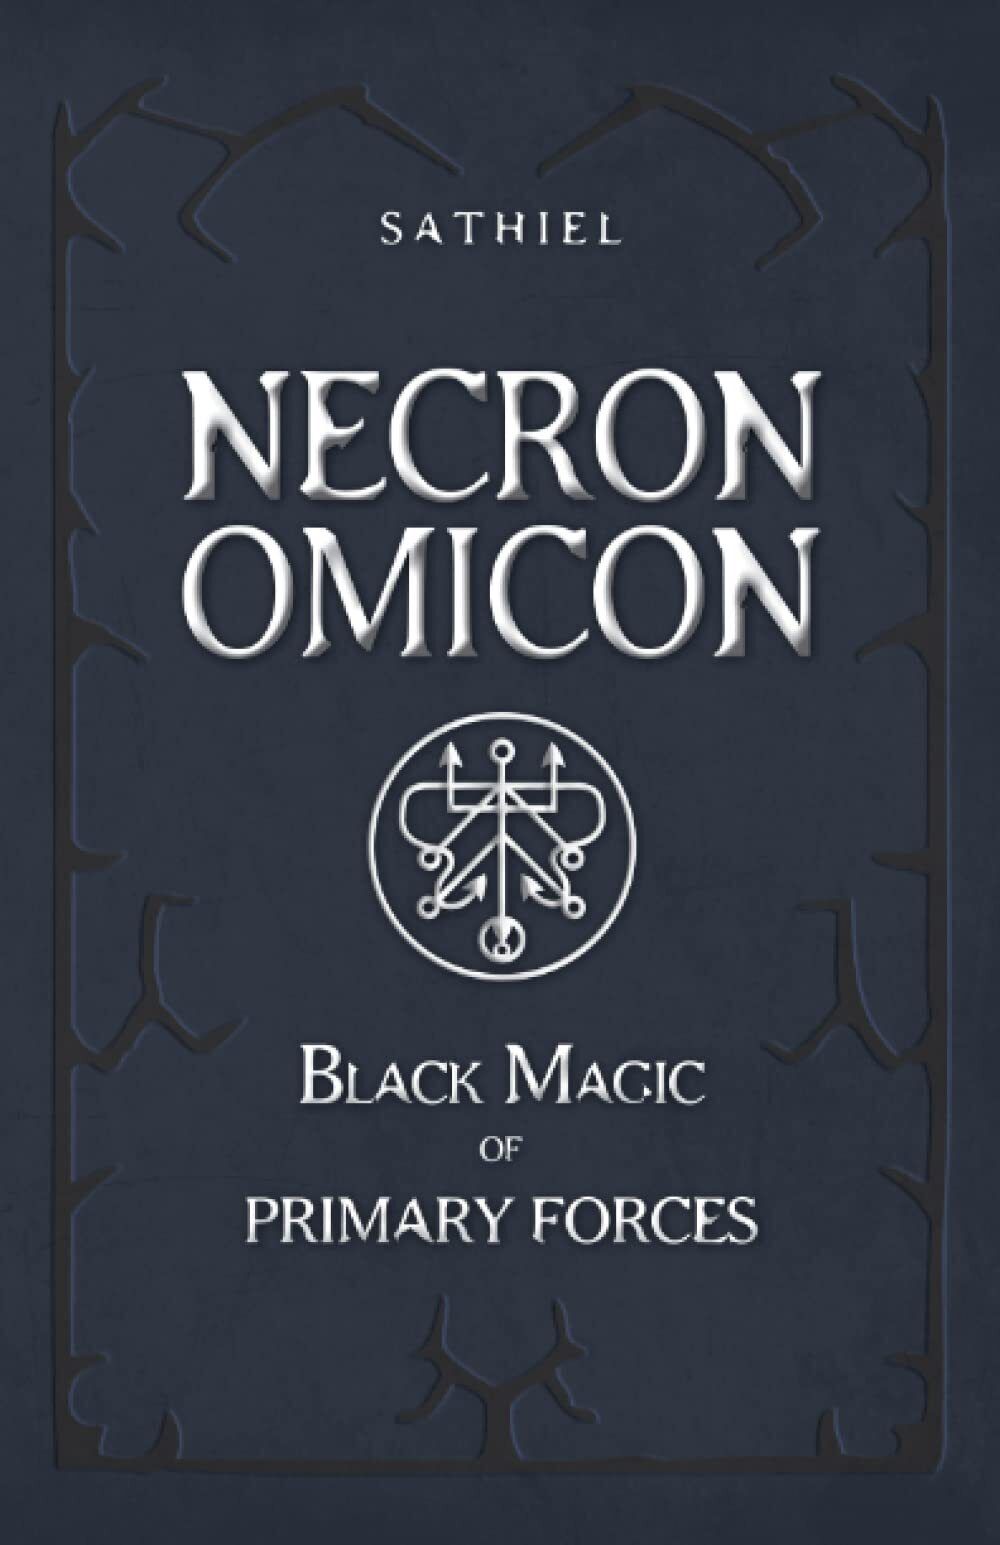 NECRONOMICON: Black Magic of Primary Forces - Sathiel - Unicursal, 2022